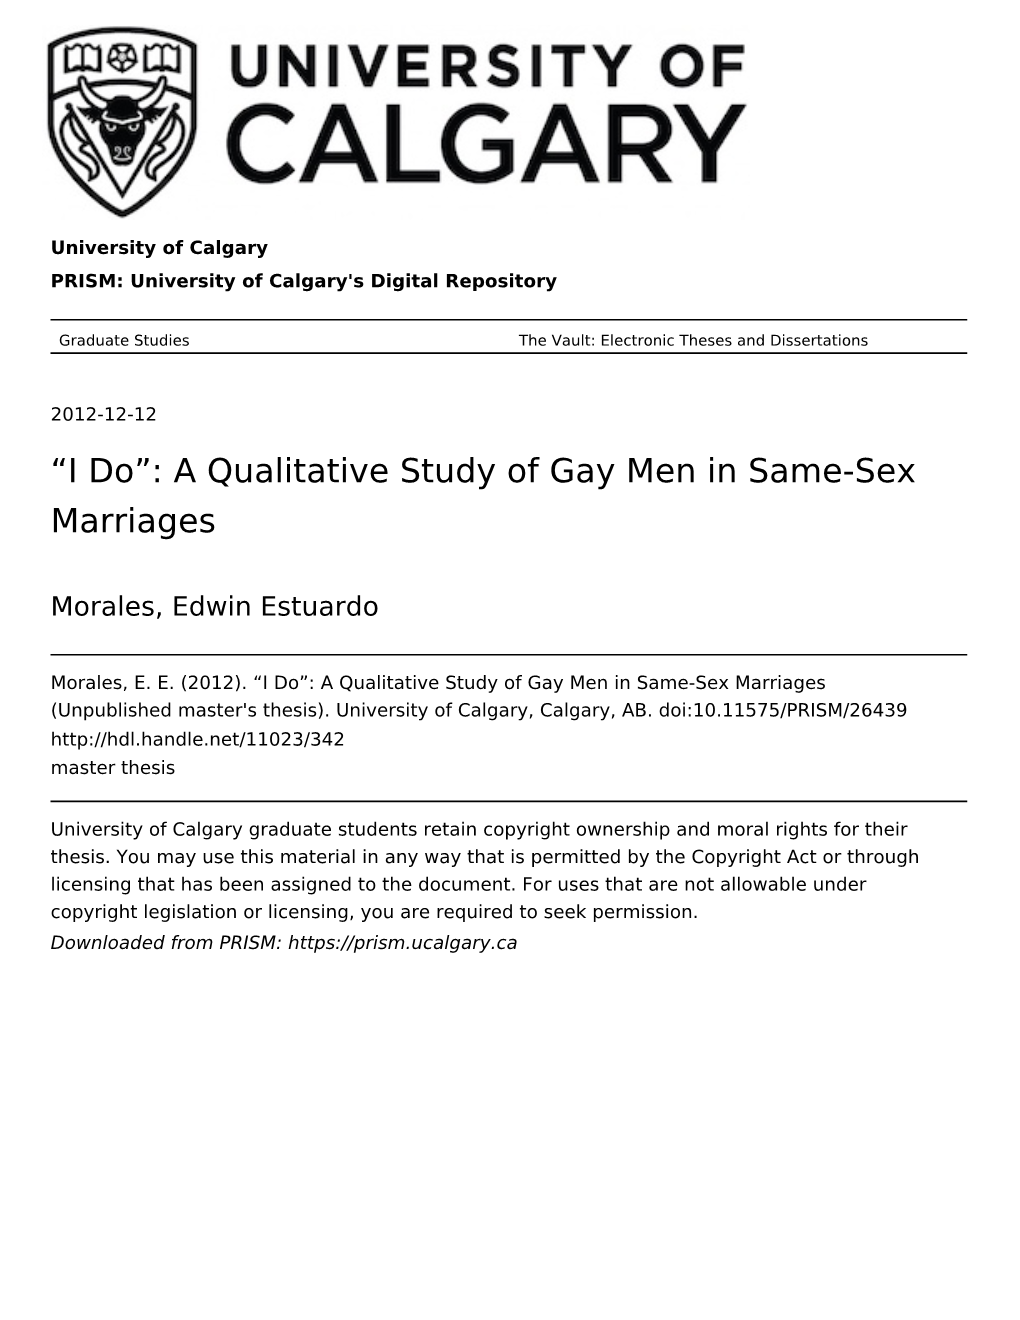 “I Do”: a Qualitative Study of Gay Men in Same-Sex Marriages